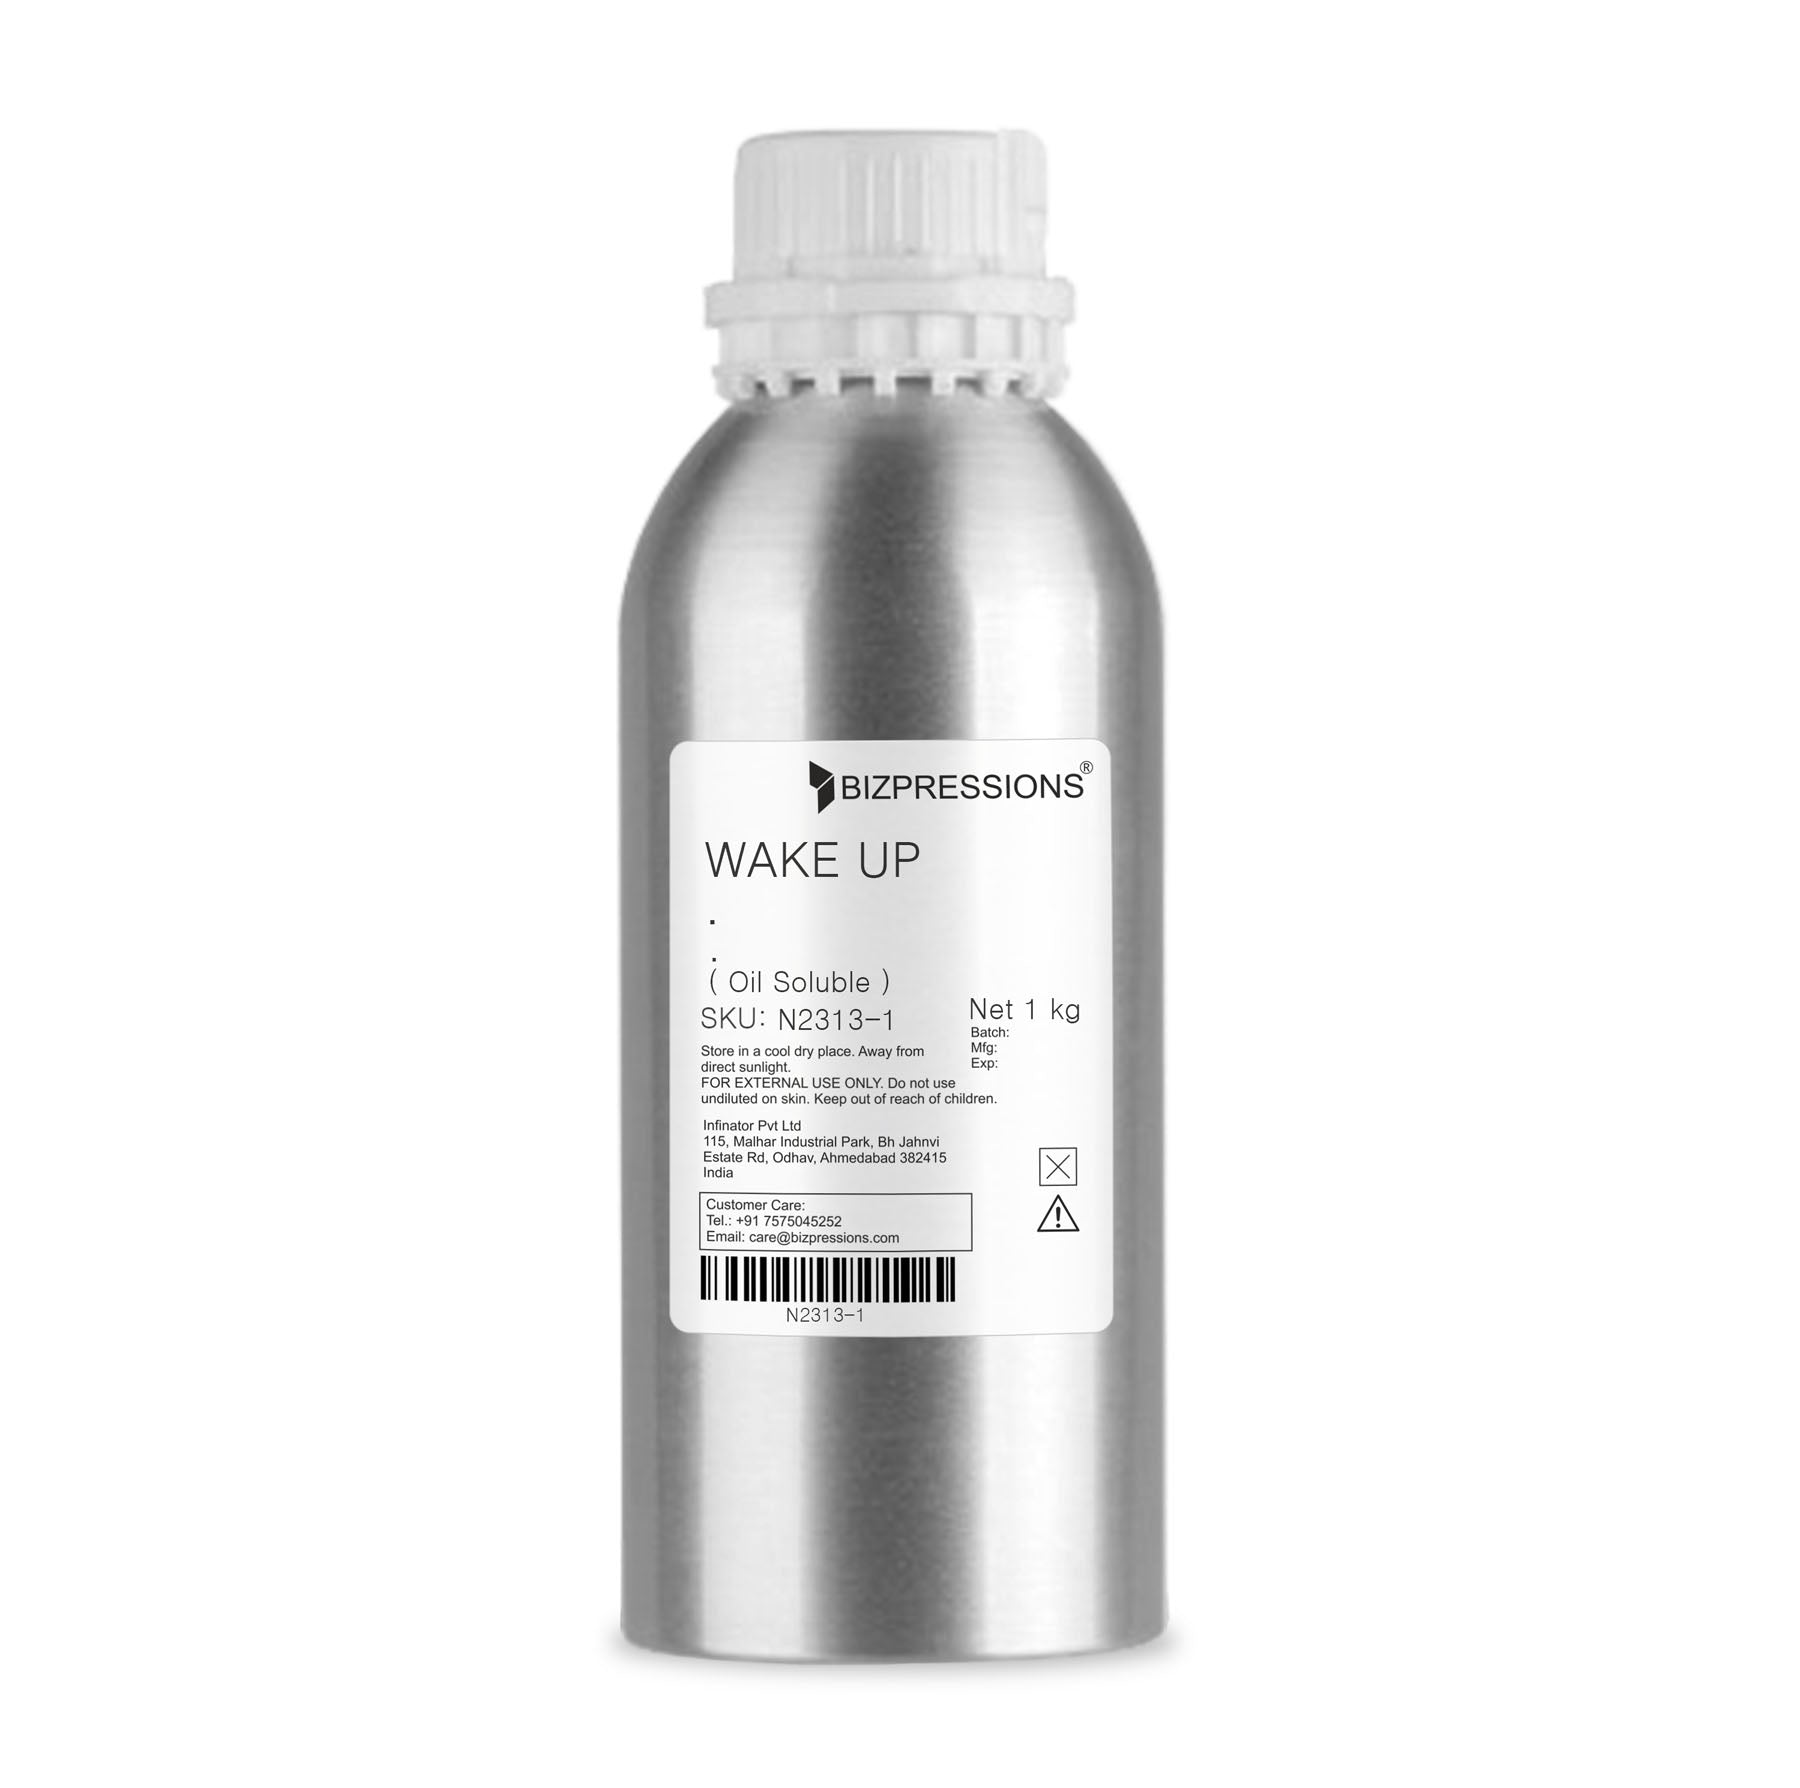 WAKE UP - Fragrance ( Oil Soluble ) - 1 kg